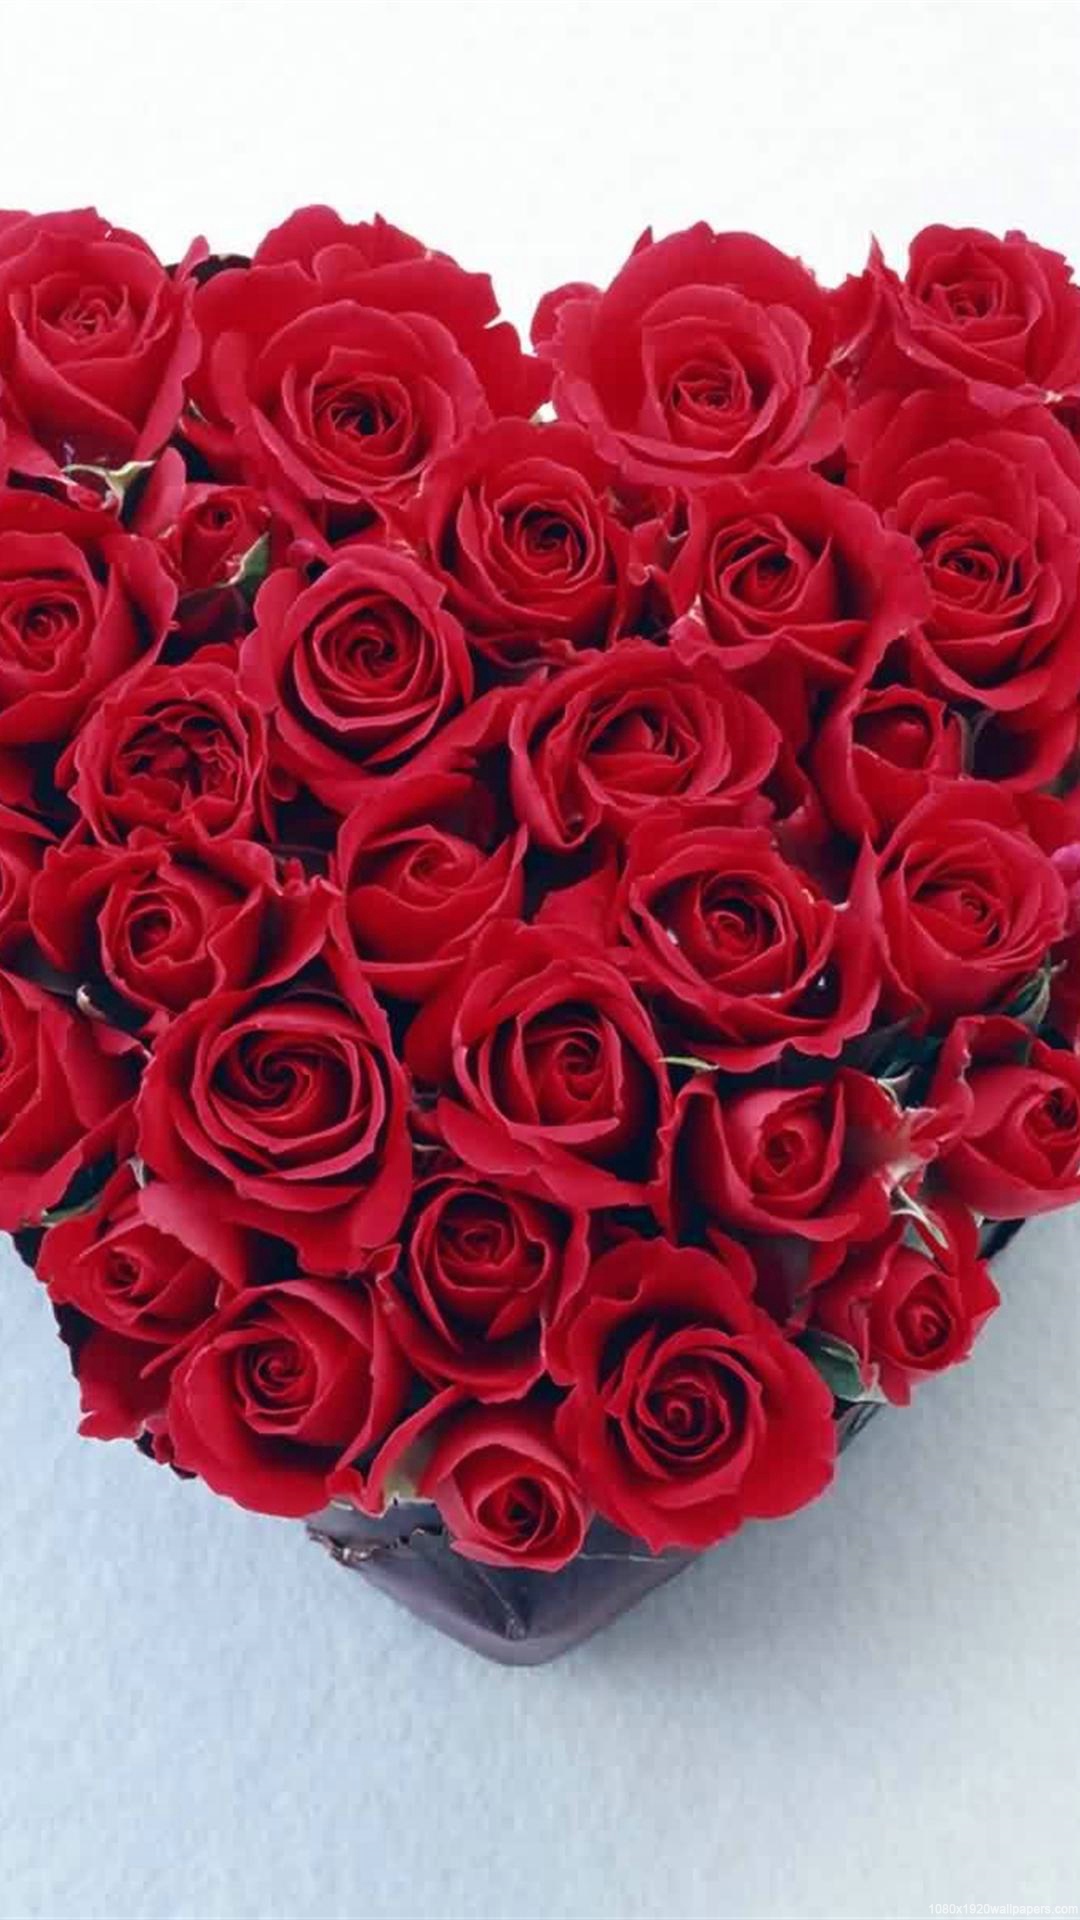 Rose Love Flowers Wallpapers Hd - Red Rose - HD Wallpaper 